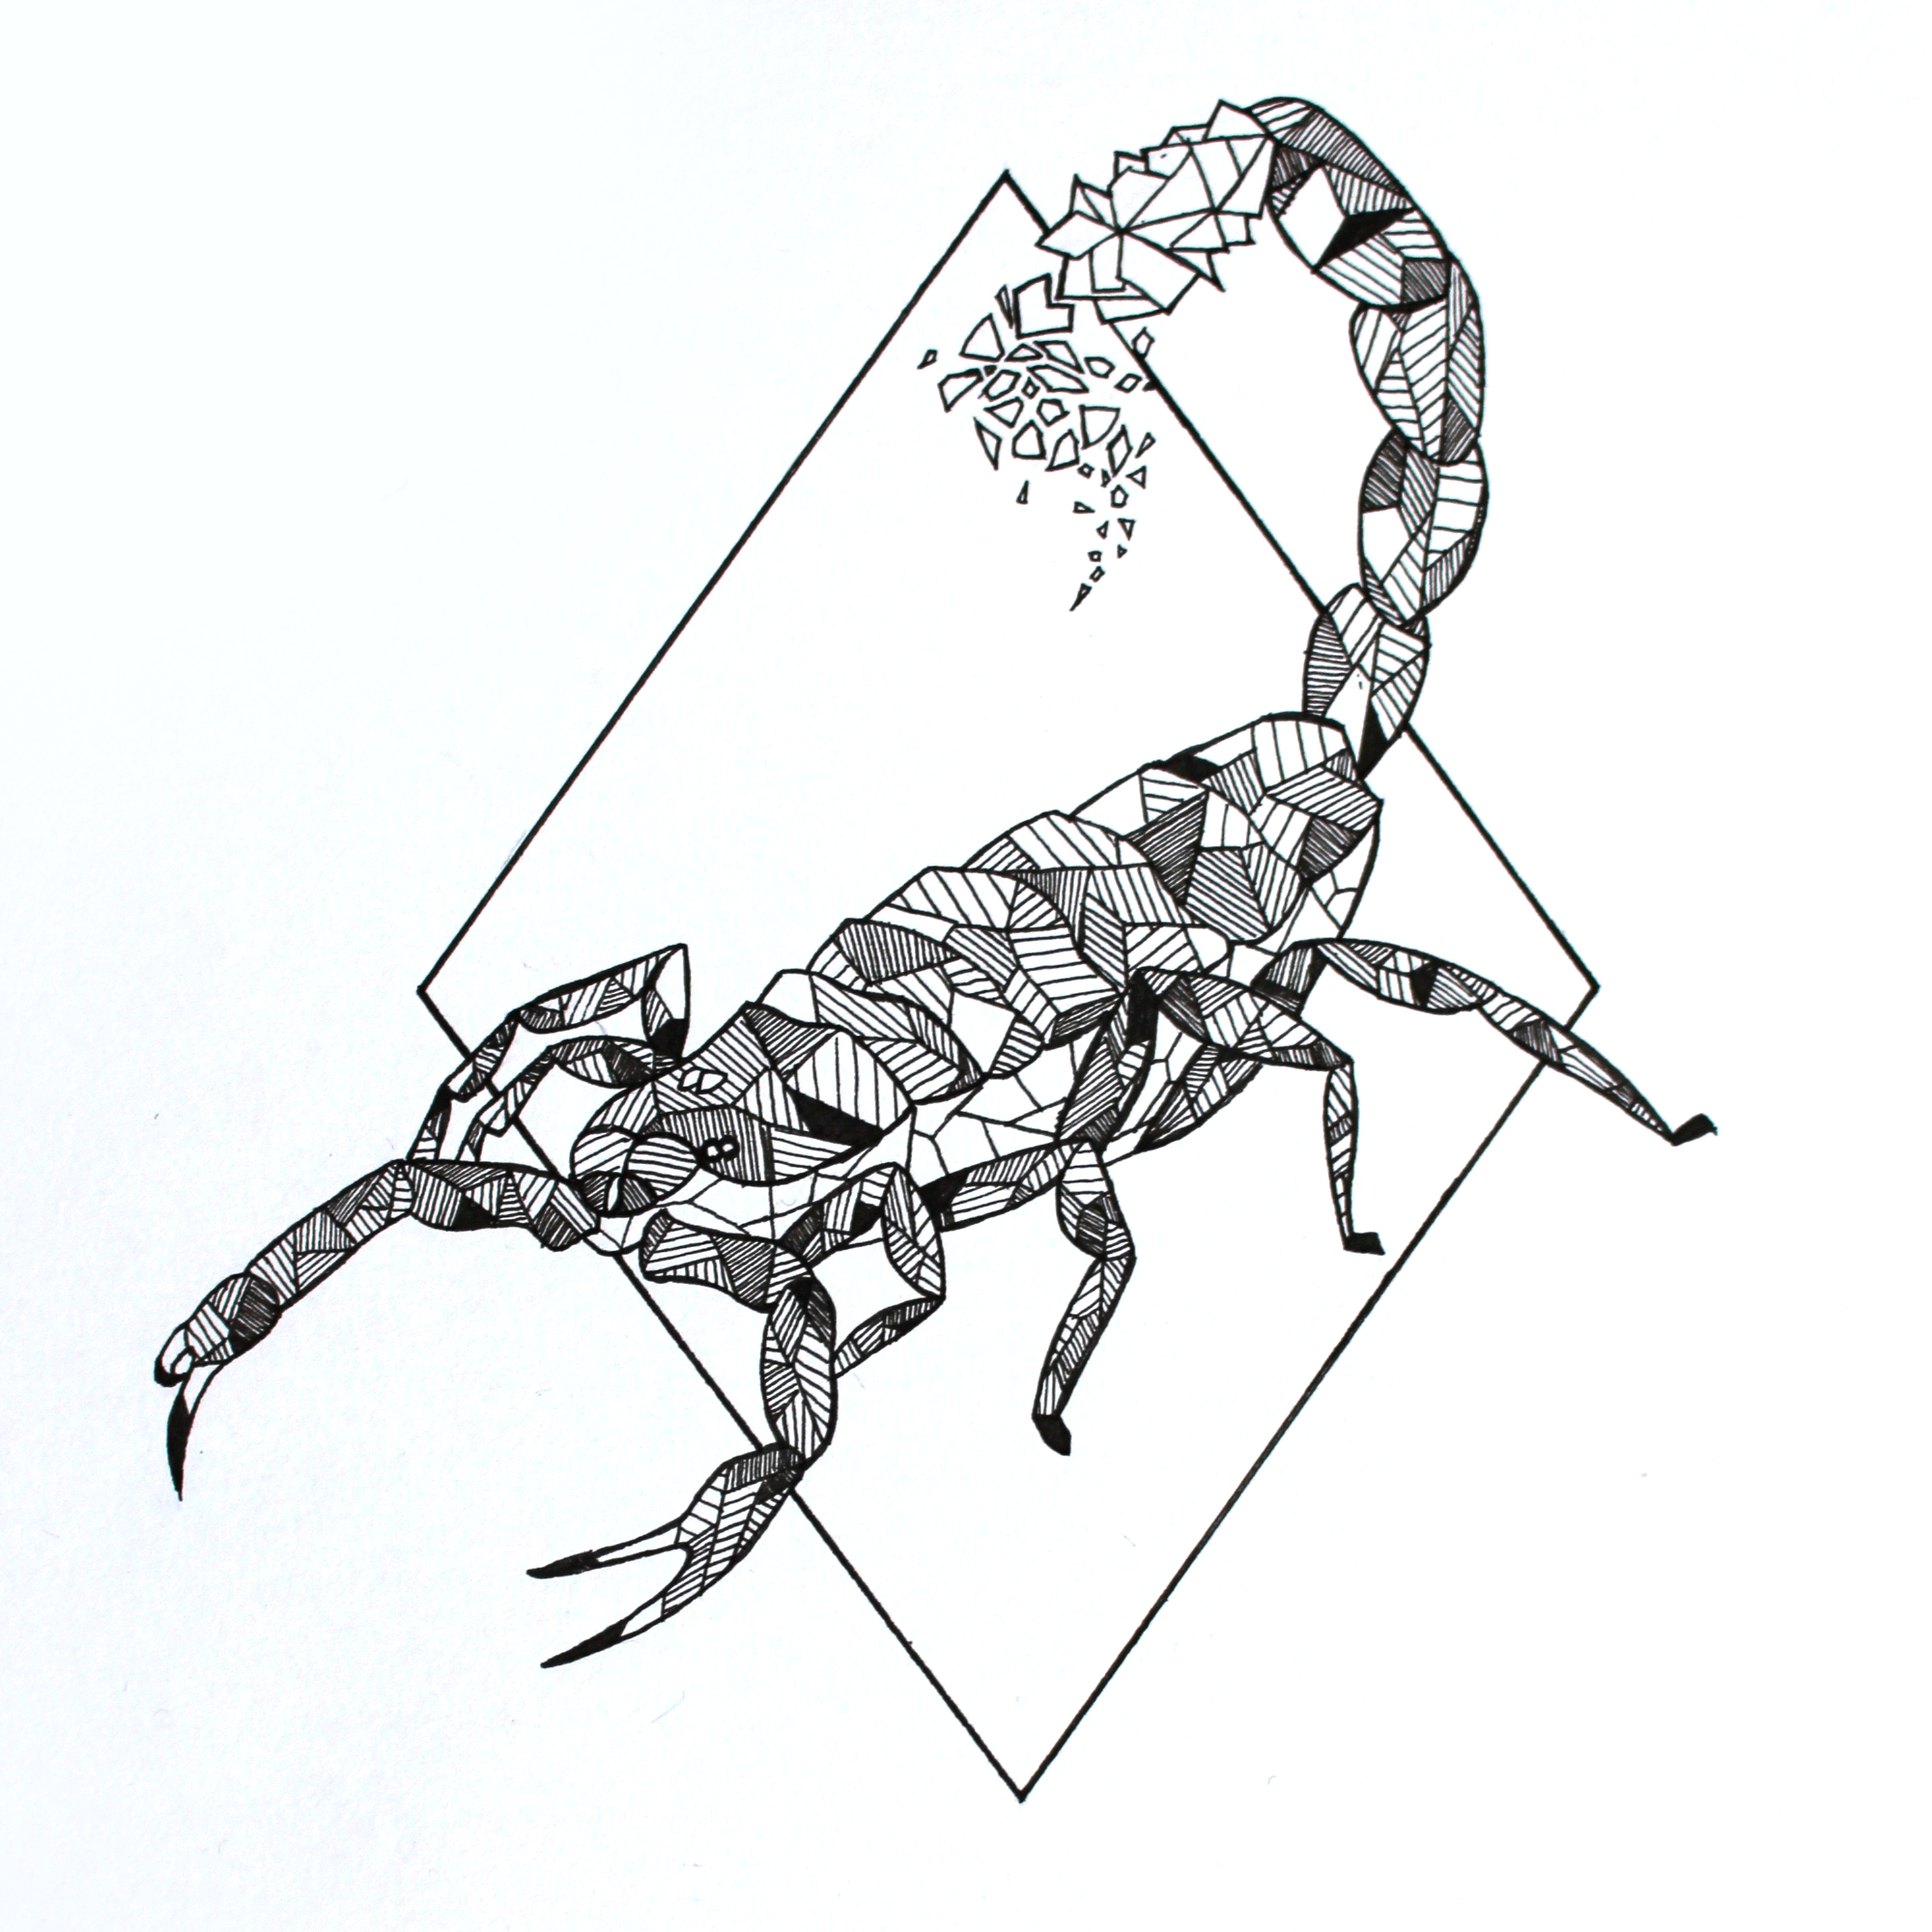 Какой тип характерен для азиатского скорпиона. Скорпион эскиз. Стилизованный Скорпион. Скорпион тату эскиз. Геометрический Скорпион.